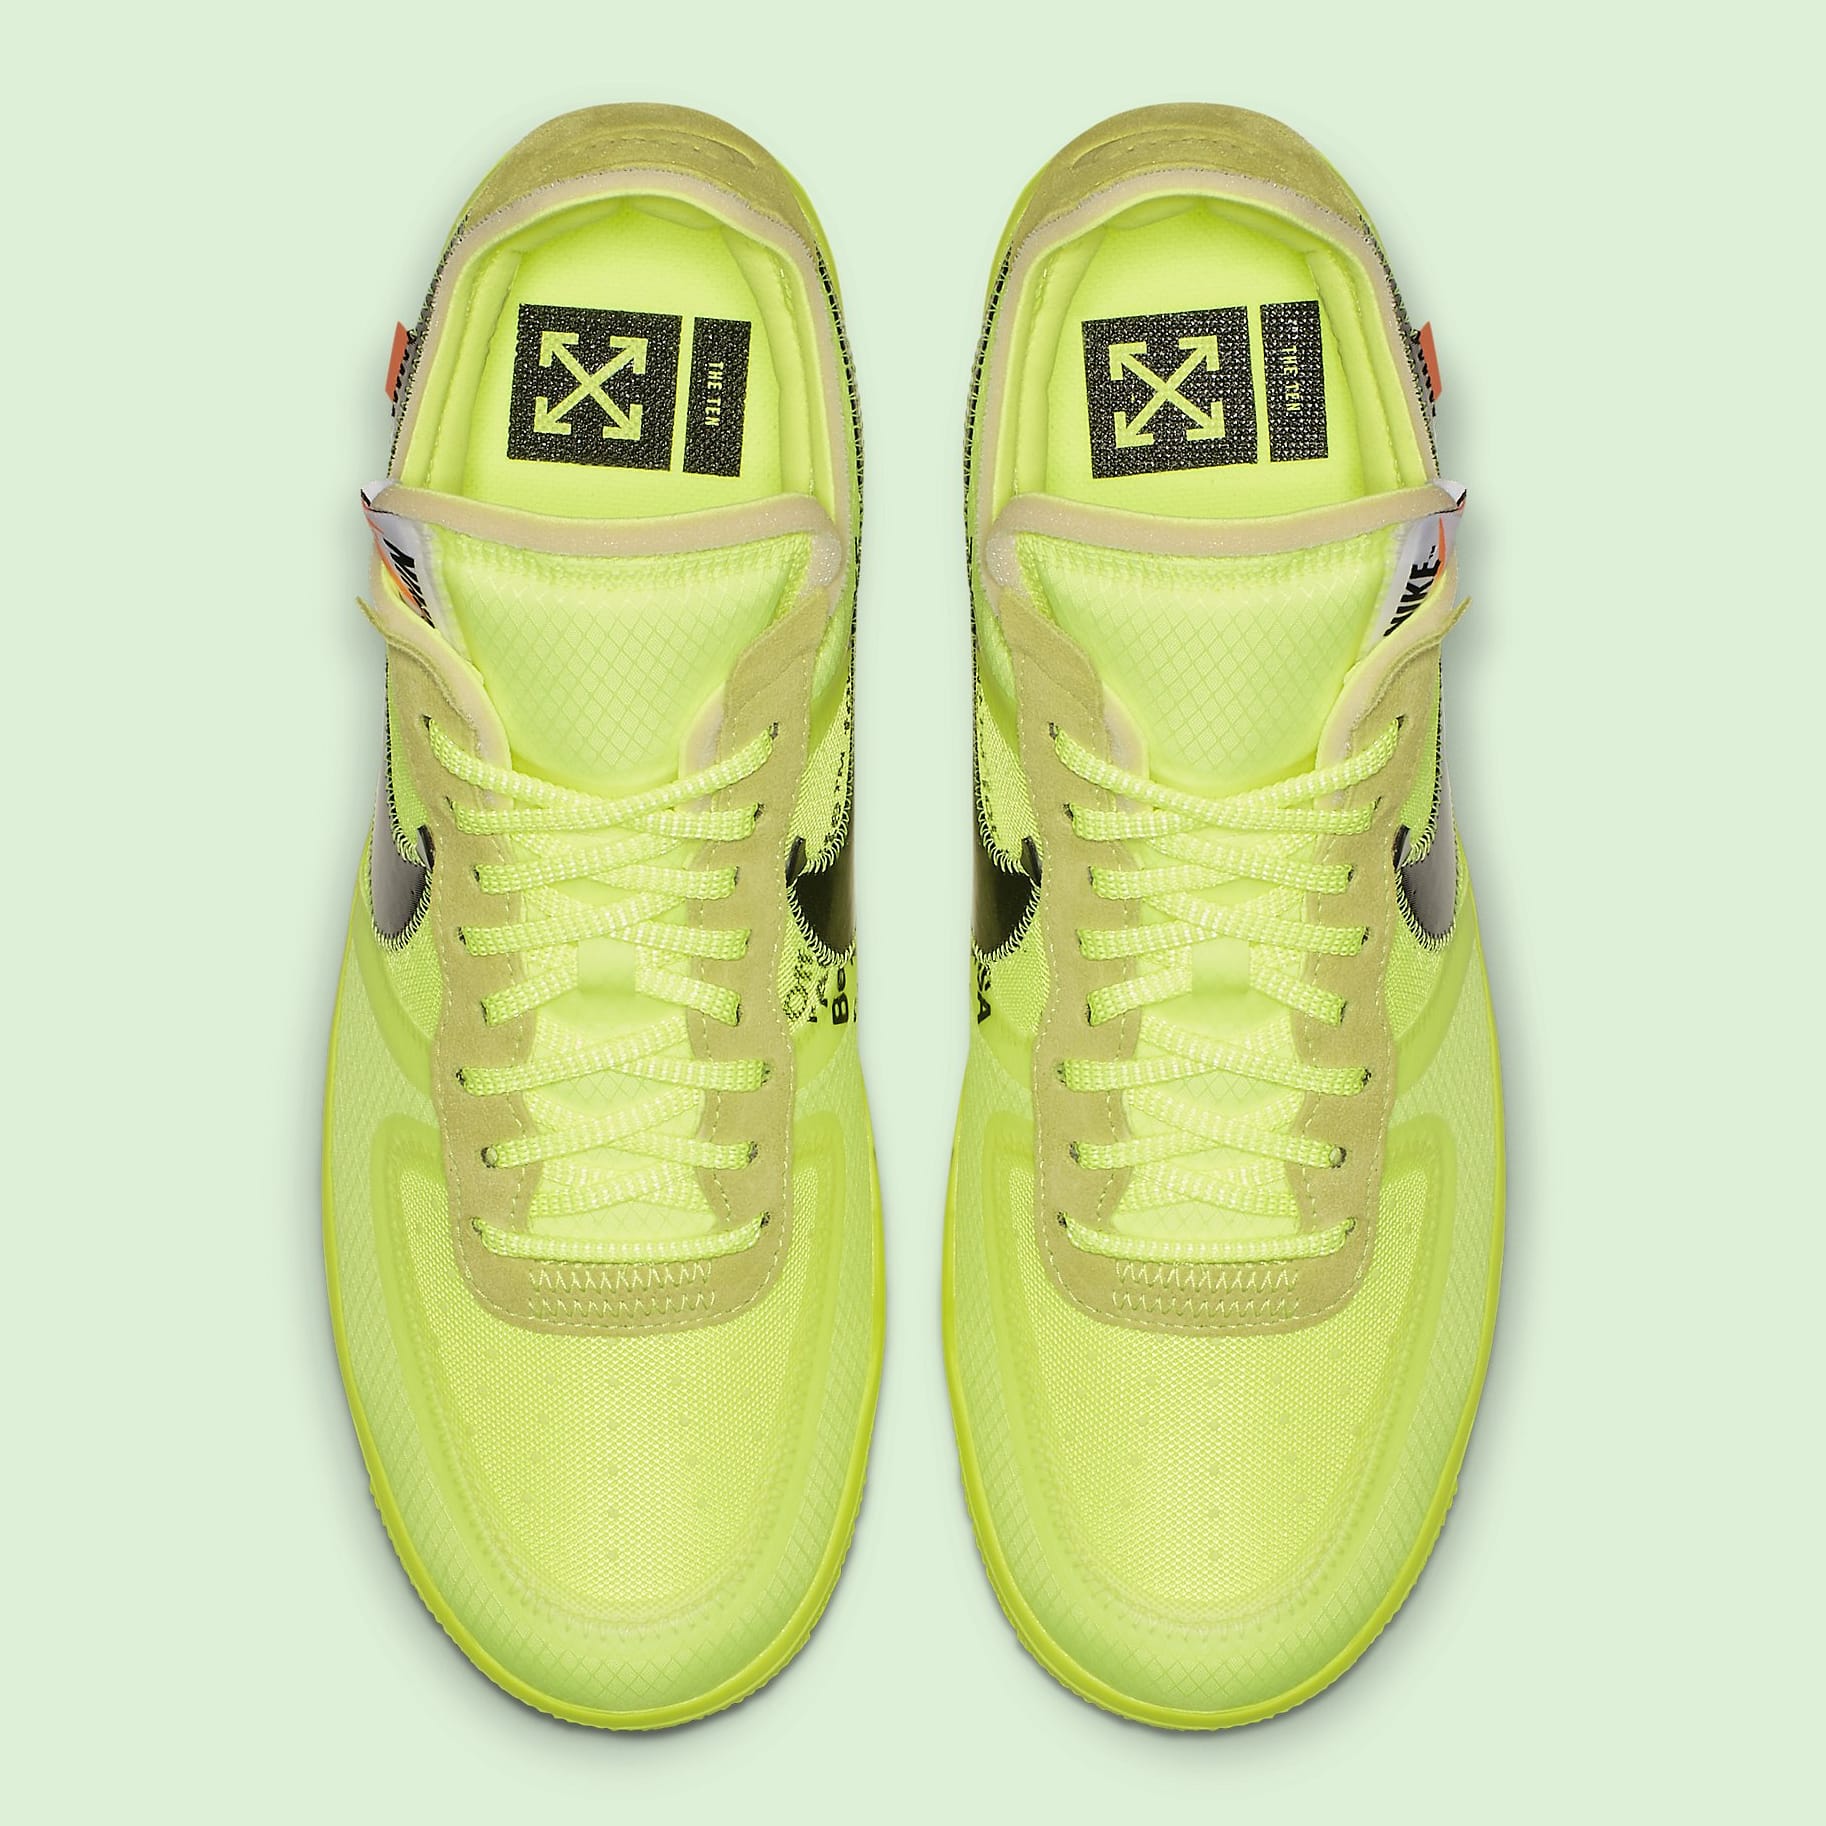 Breaking News: The Off-White x Nike Air Force 1 “Brooklyn” is